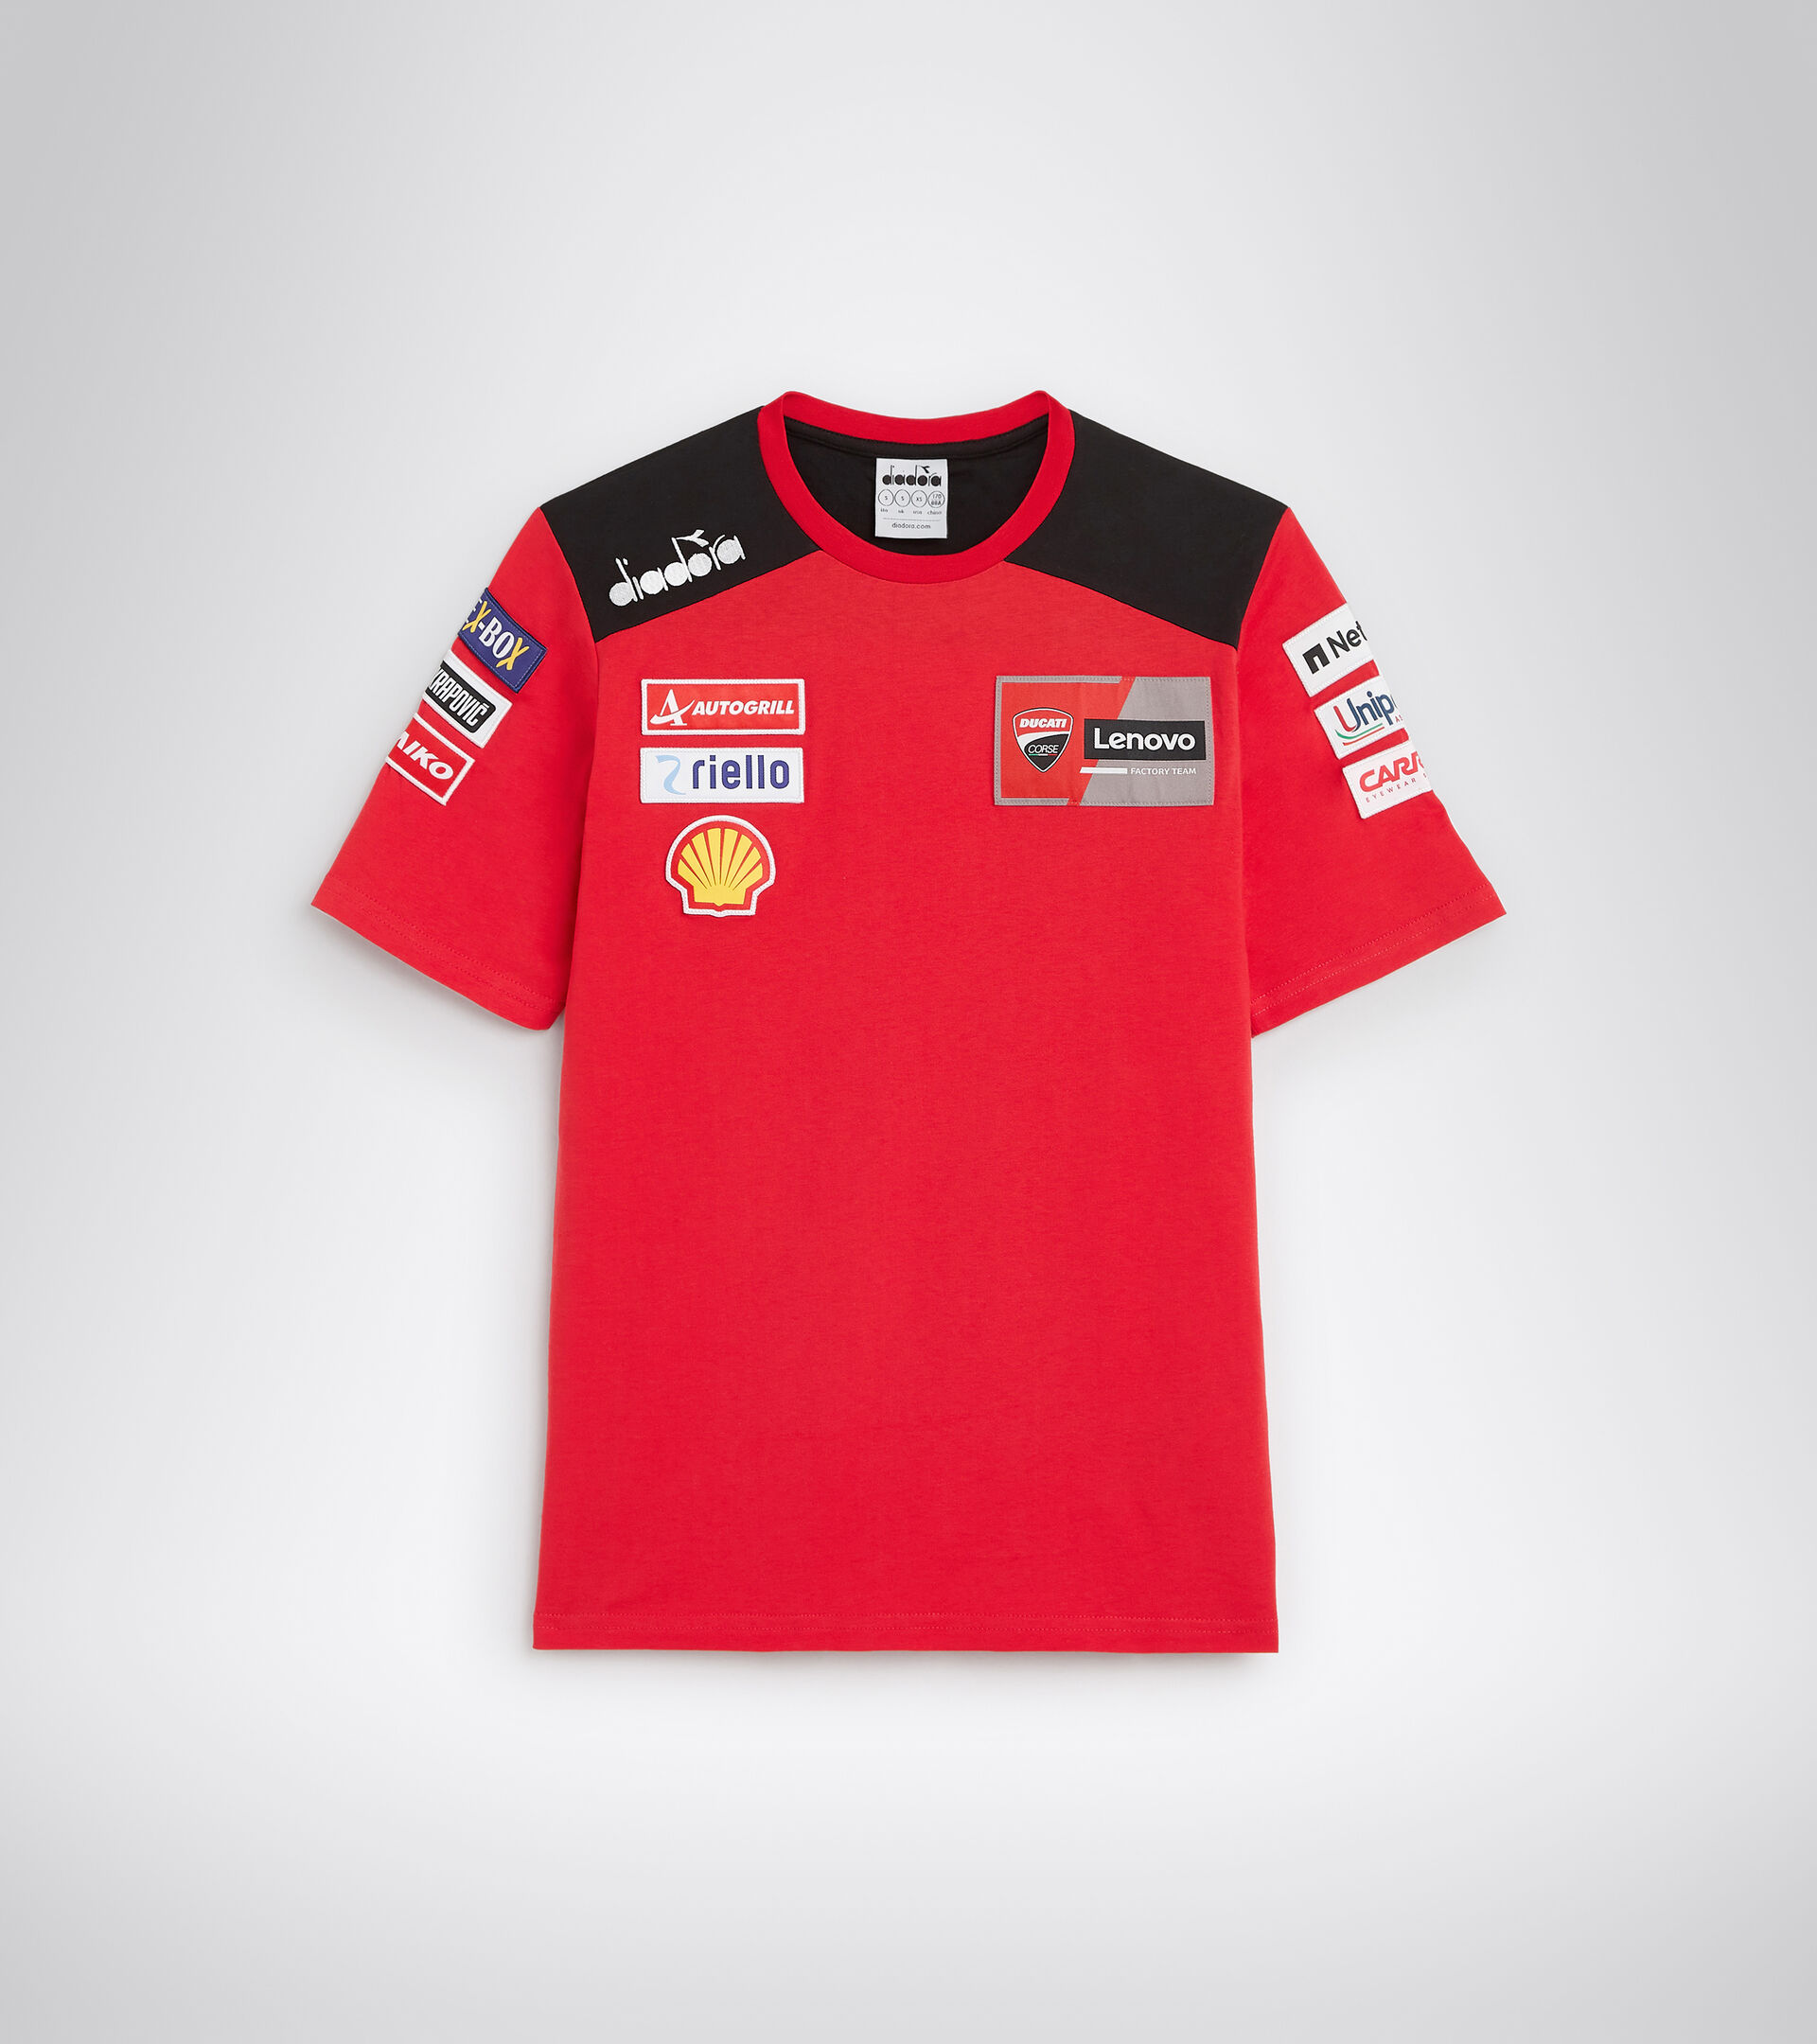 2019 Ducati Corse Racing MotoGP Mens T-Shirt Black 100% Cotton Tee Sizes S-XXXL